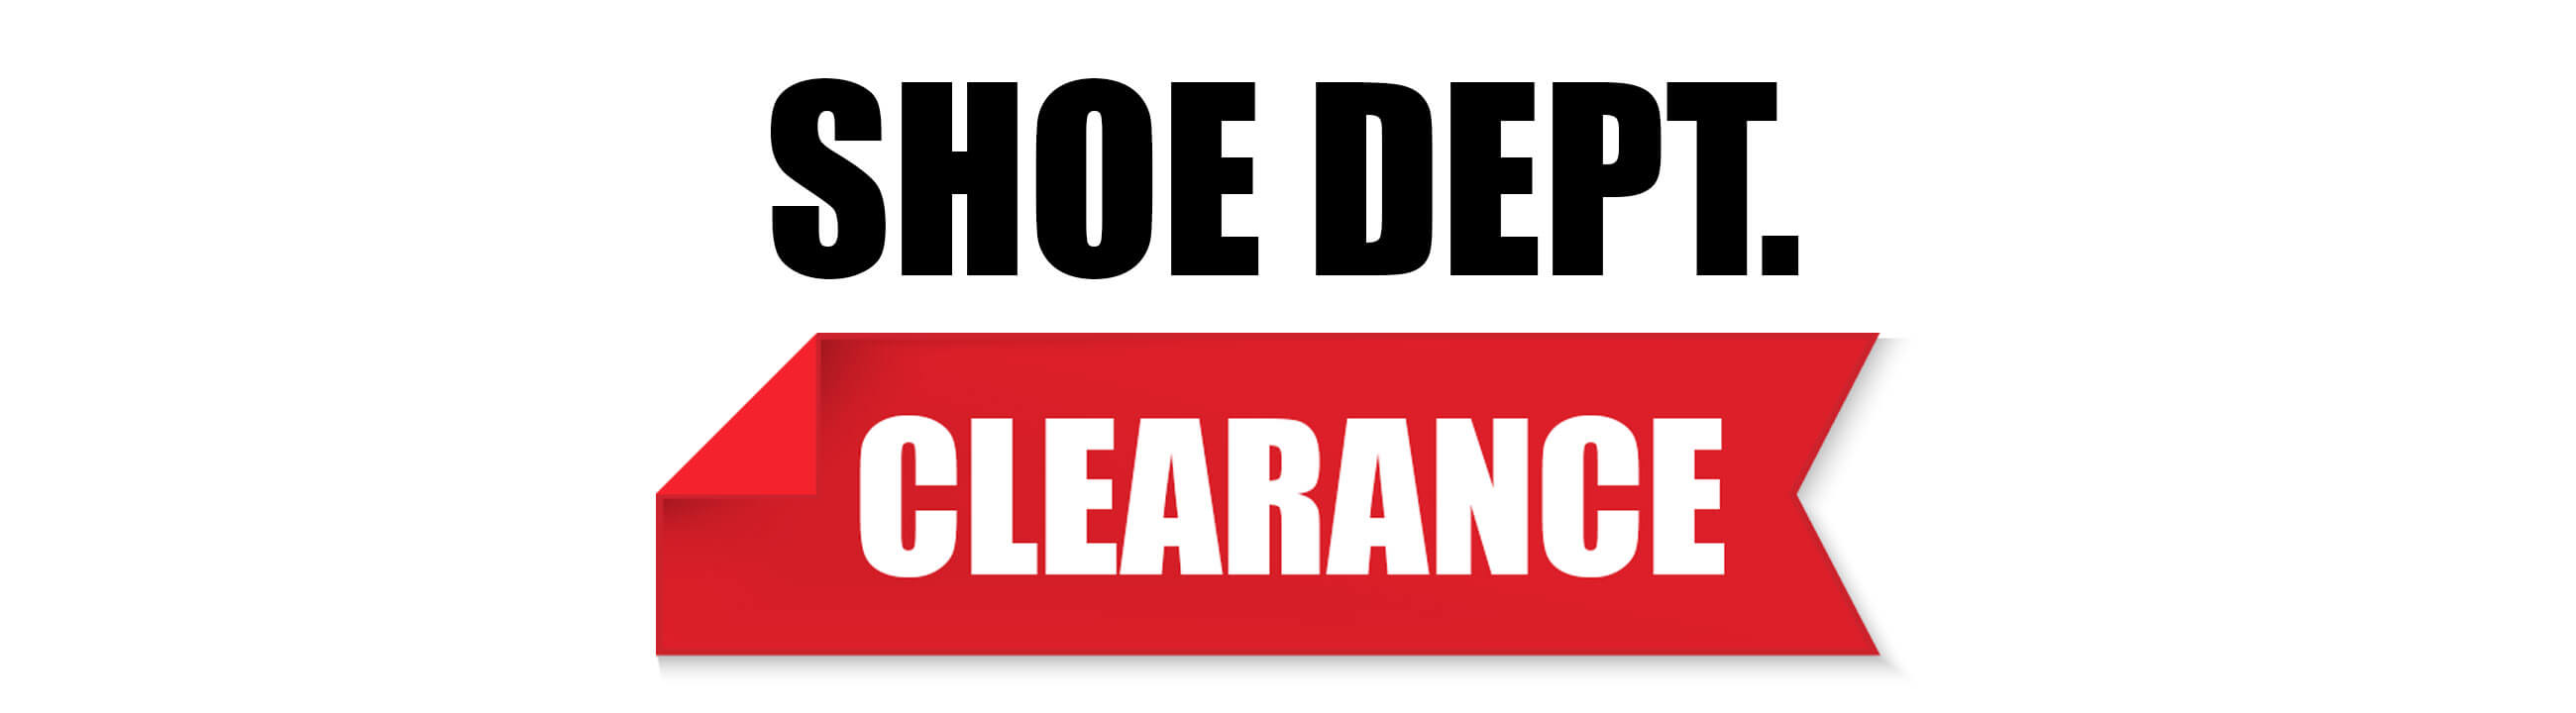 Womens Shoe Clearance 